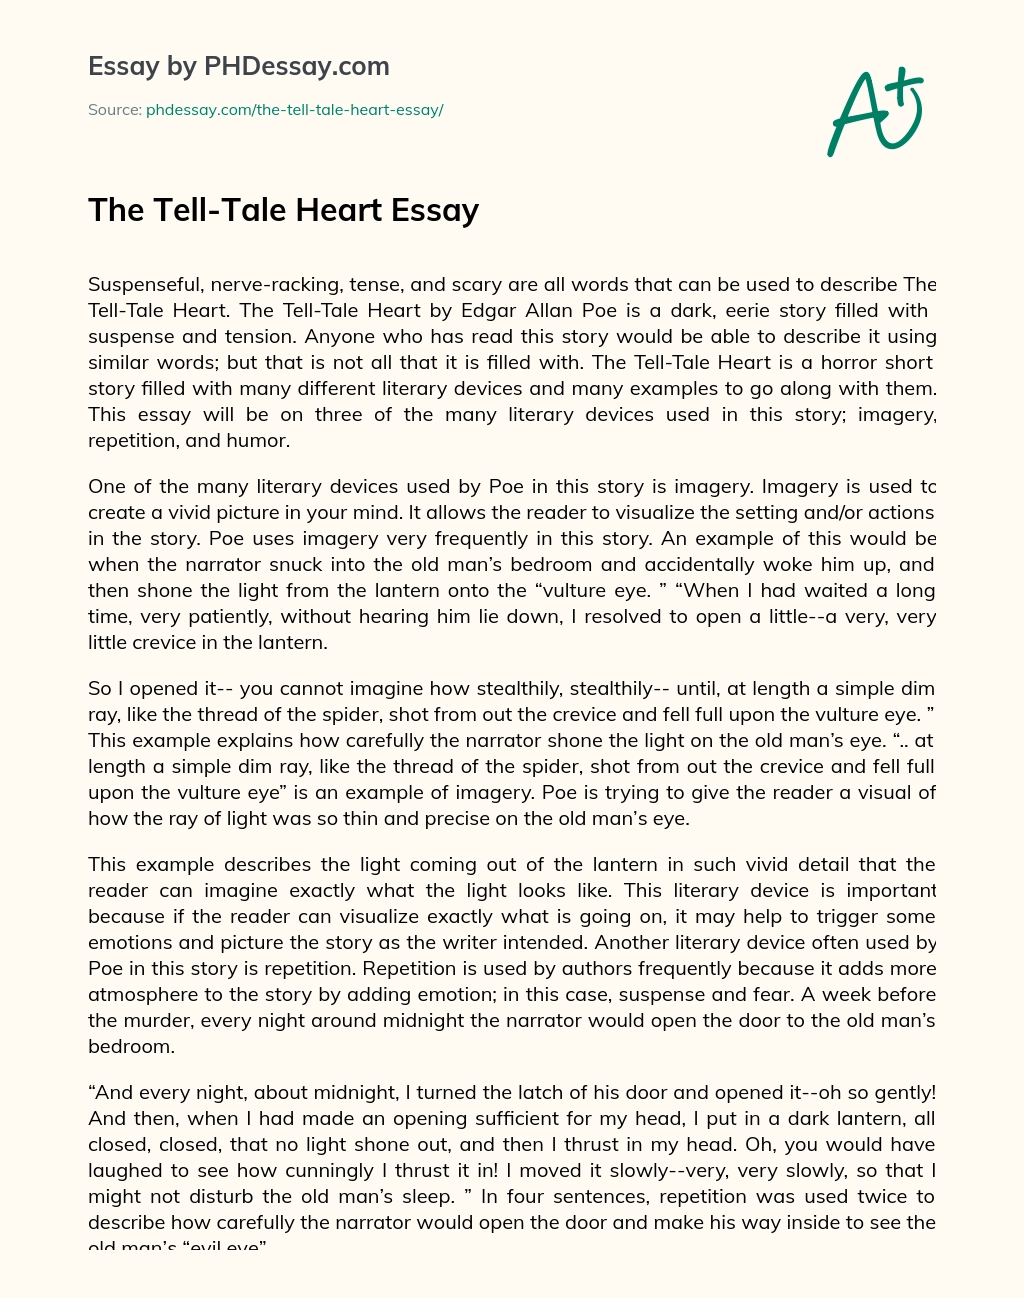 The Tell-Tale Heart Essay essay